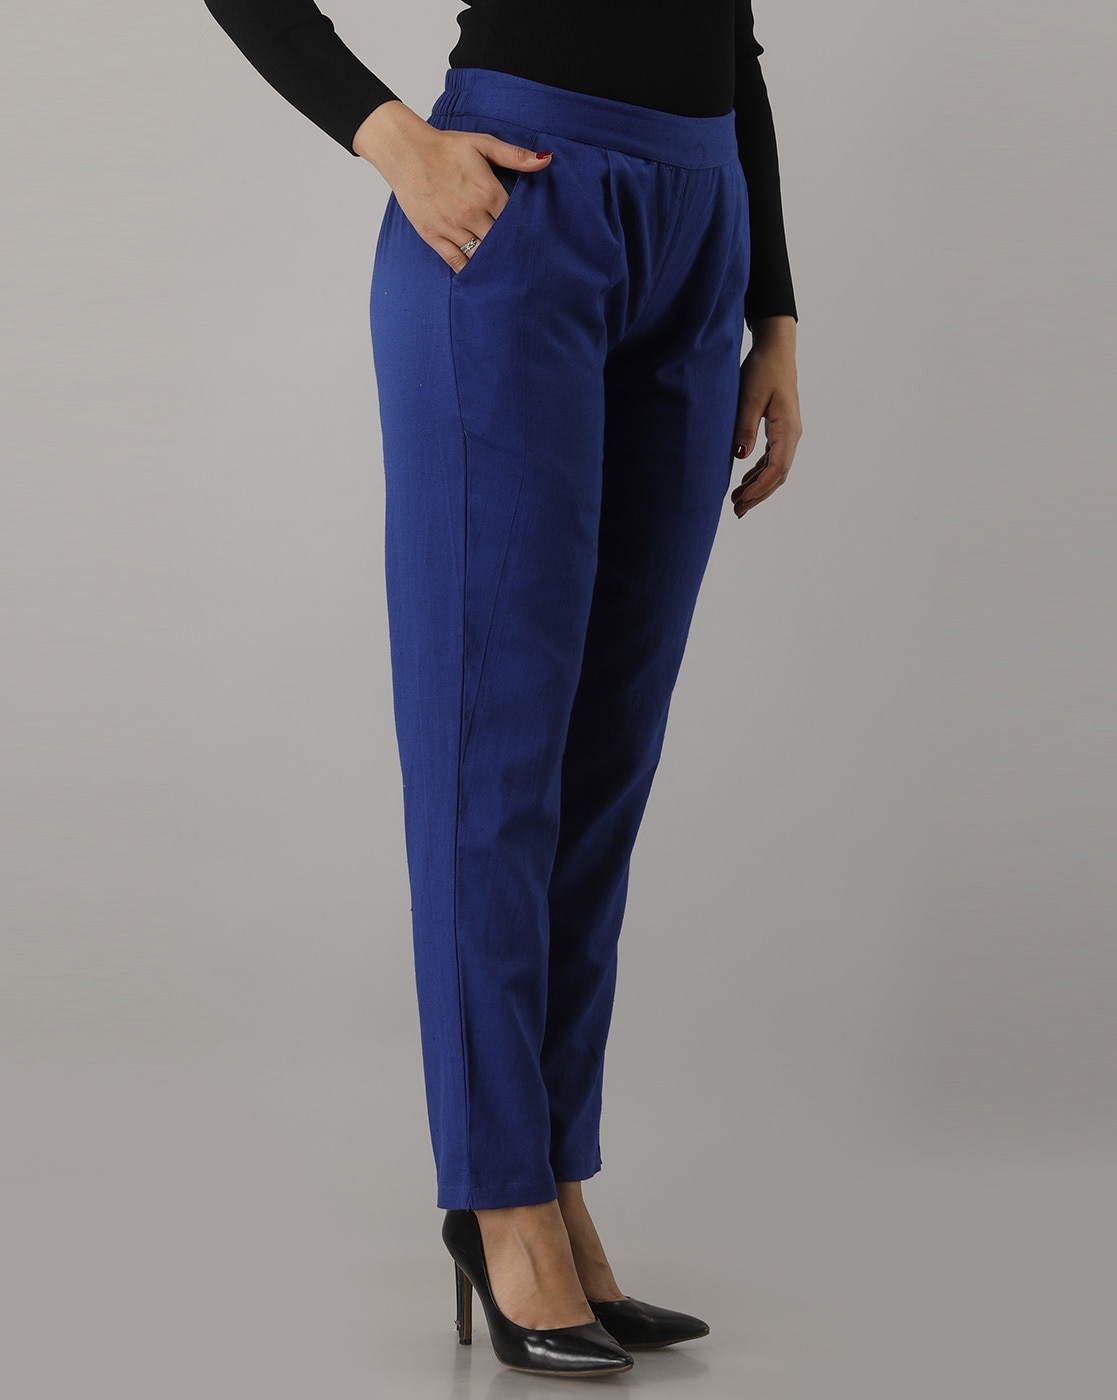 MARSHA BOOTCUT PANTS - ROYAL BLUE - Trousers - Women